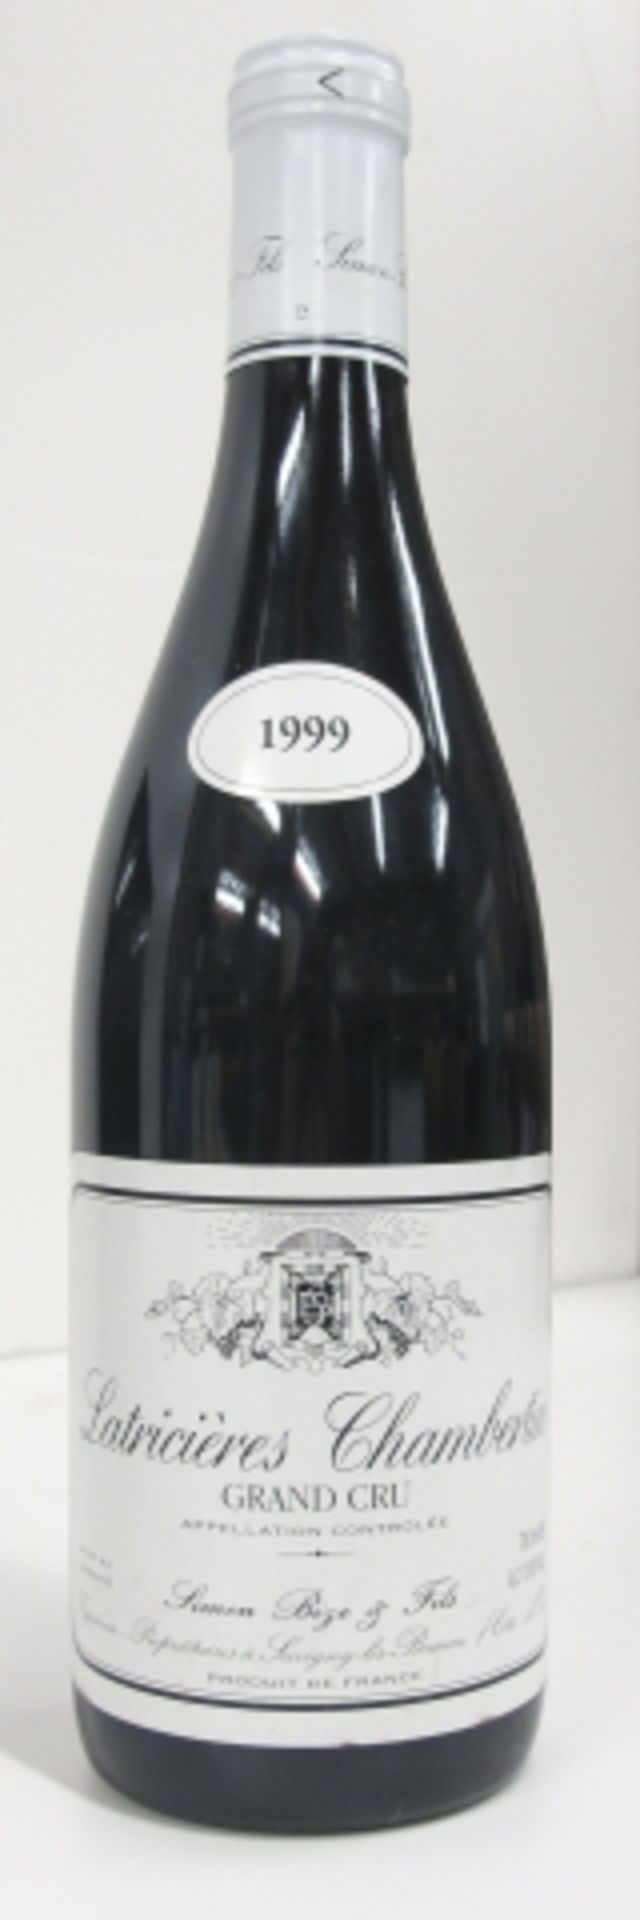 1999 Latricières-Chambertin Grand Cru, Simon Bize et Fils, Grape Variety Pinot Noir (100%), ABV 13%,